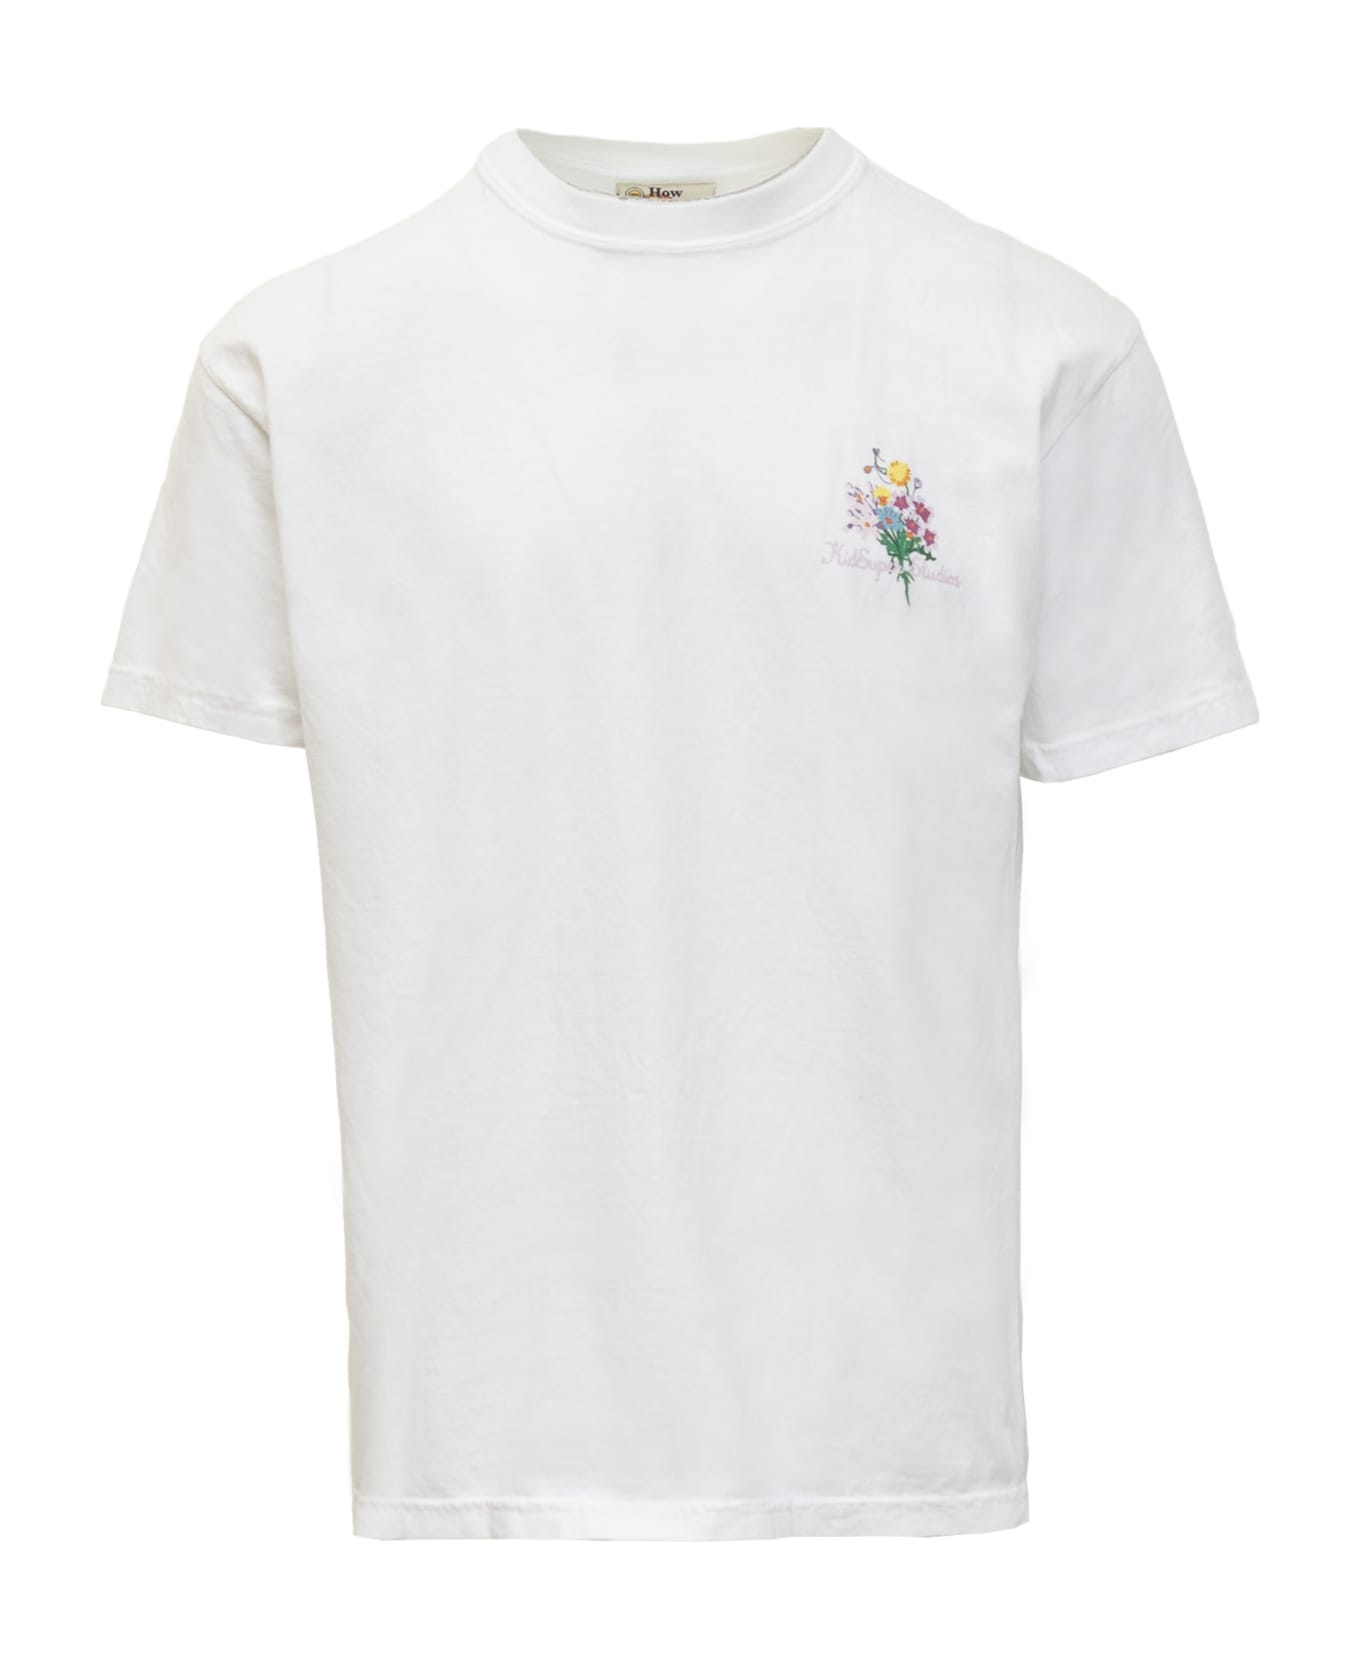 Kidsuper Growing Ideas T-shirt - WHITE シャツ